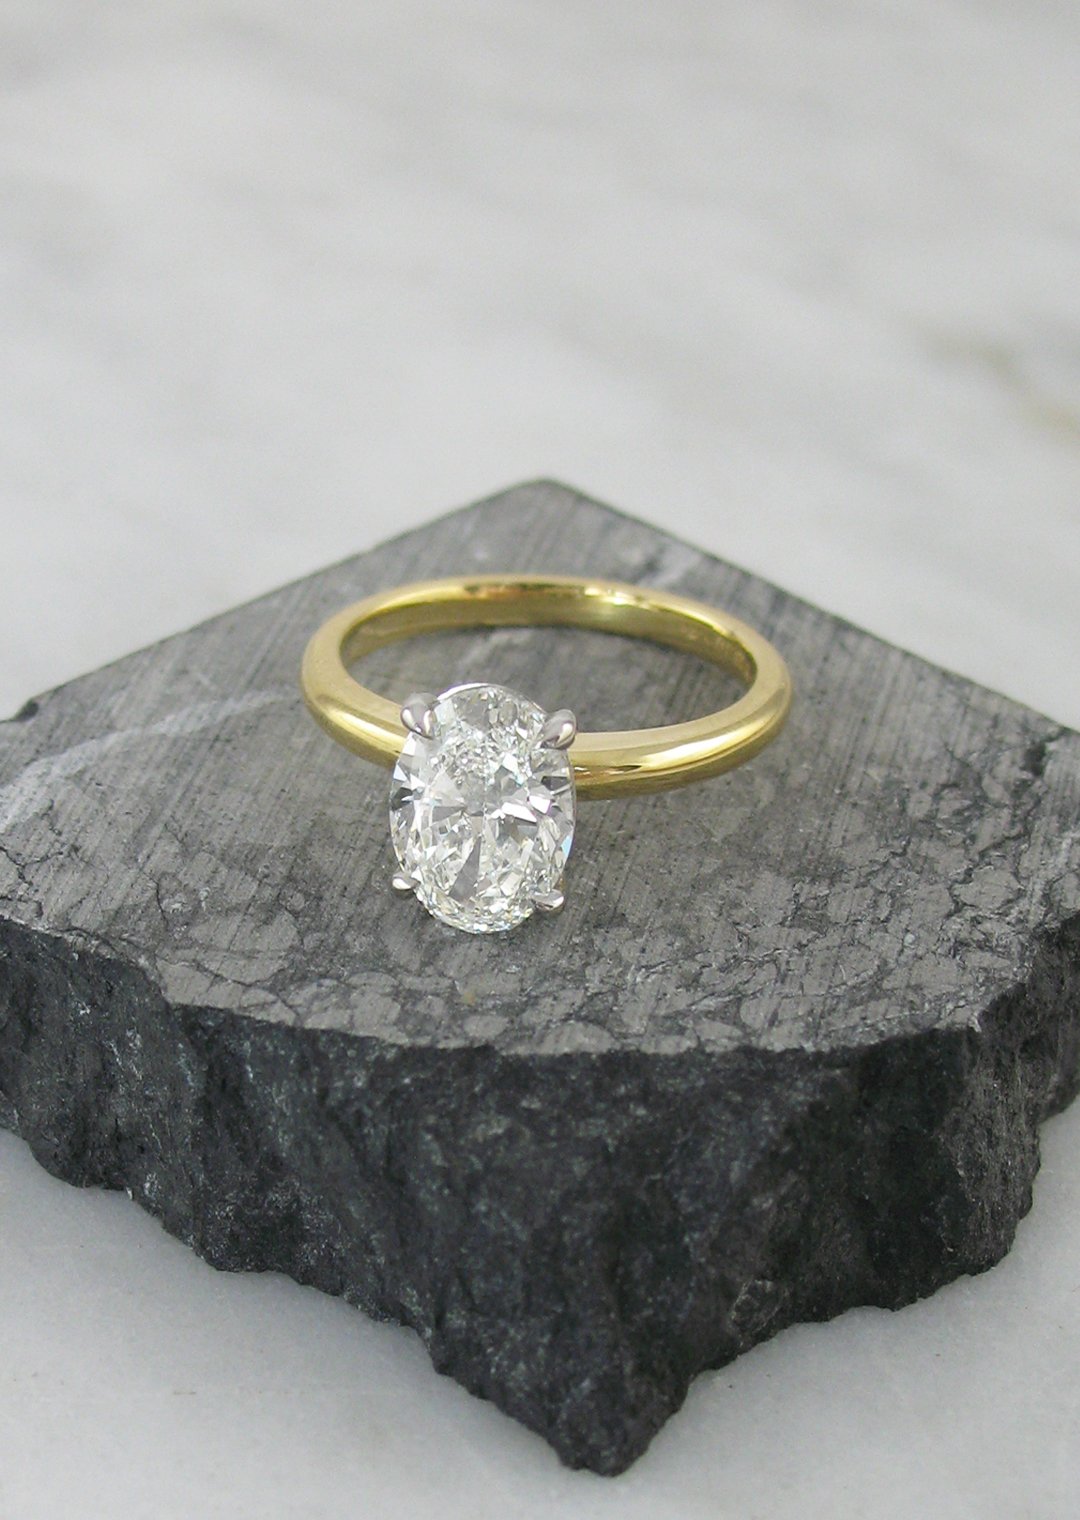 A beautiful oval diamond engagemnet ring